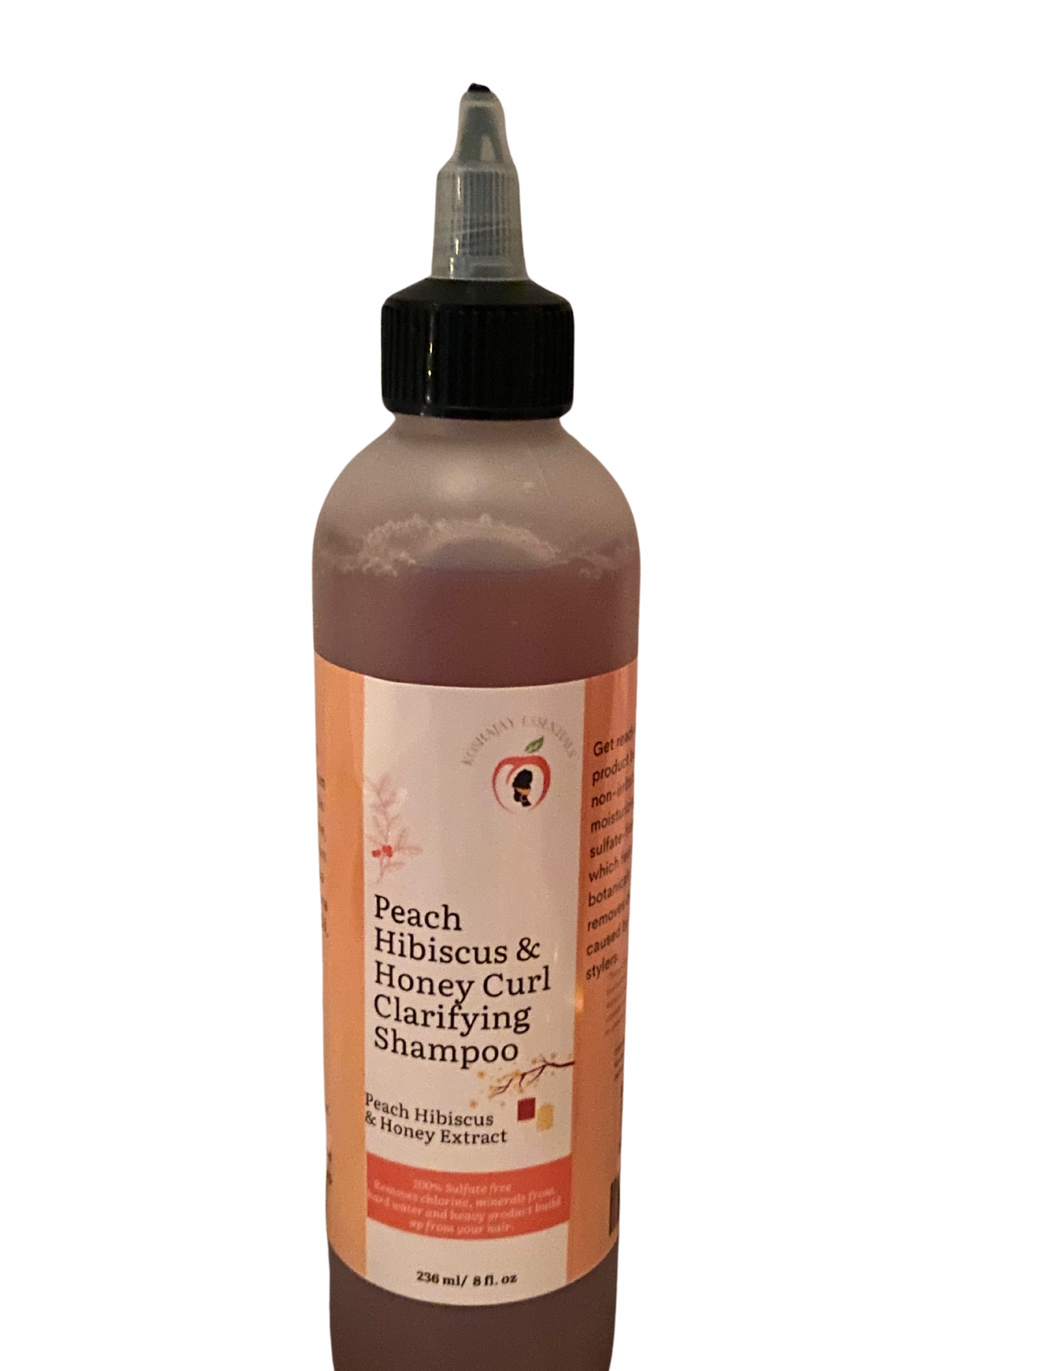 Peach Hibiscus & Honey Curl Clarifying Shampoo